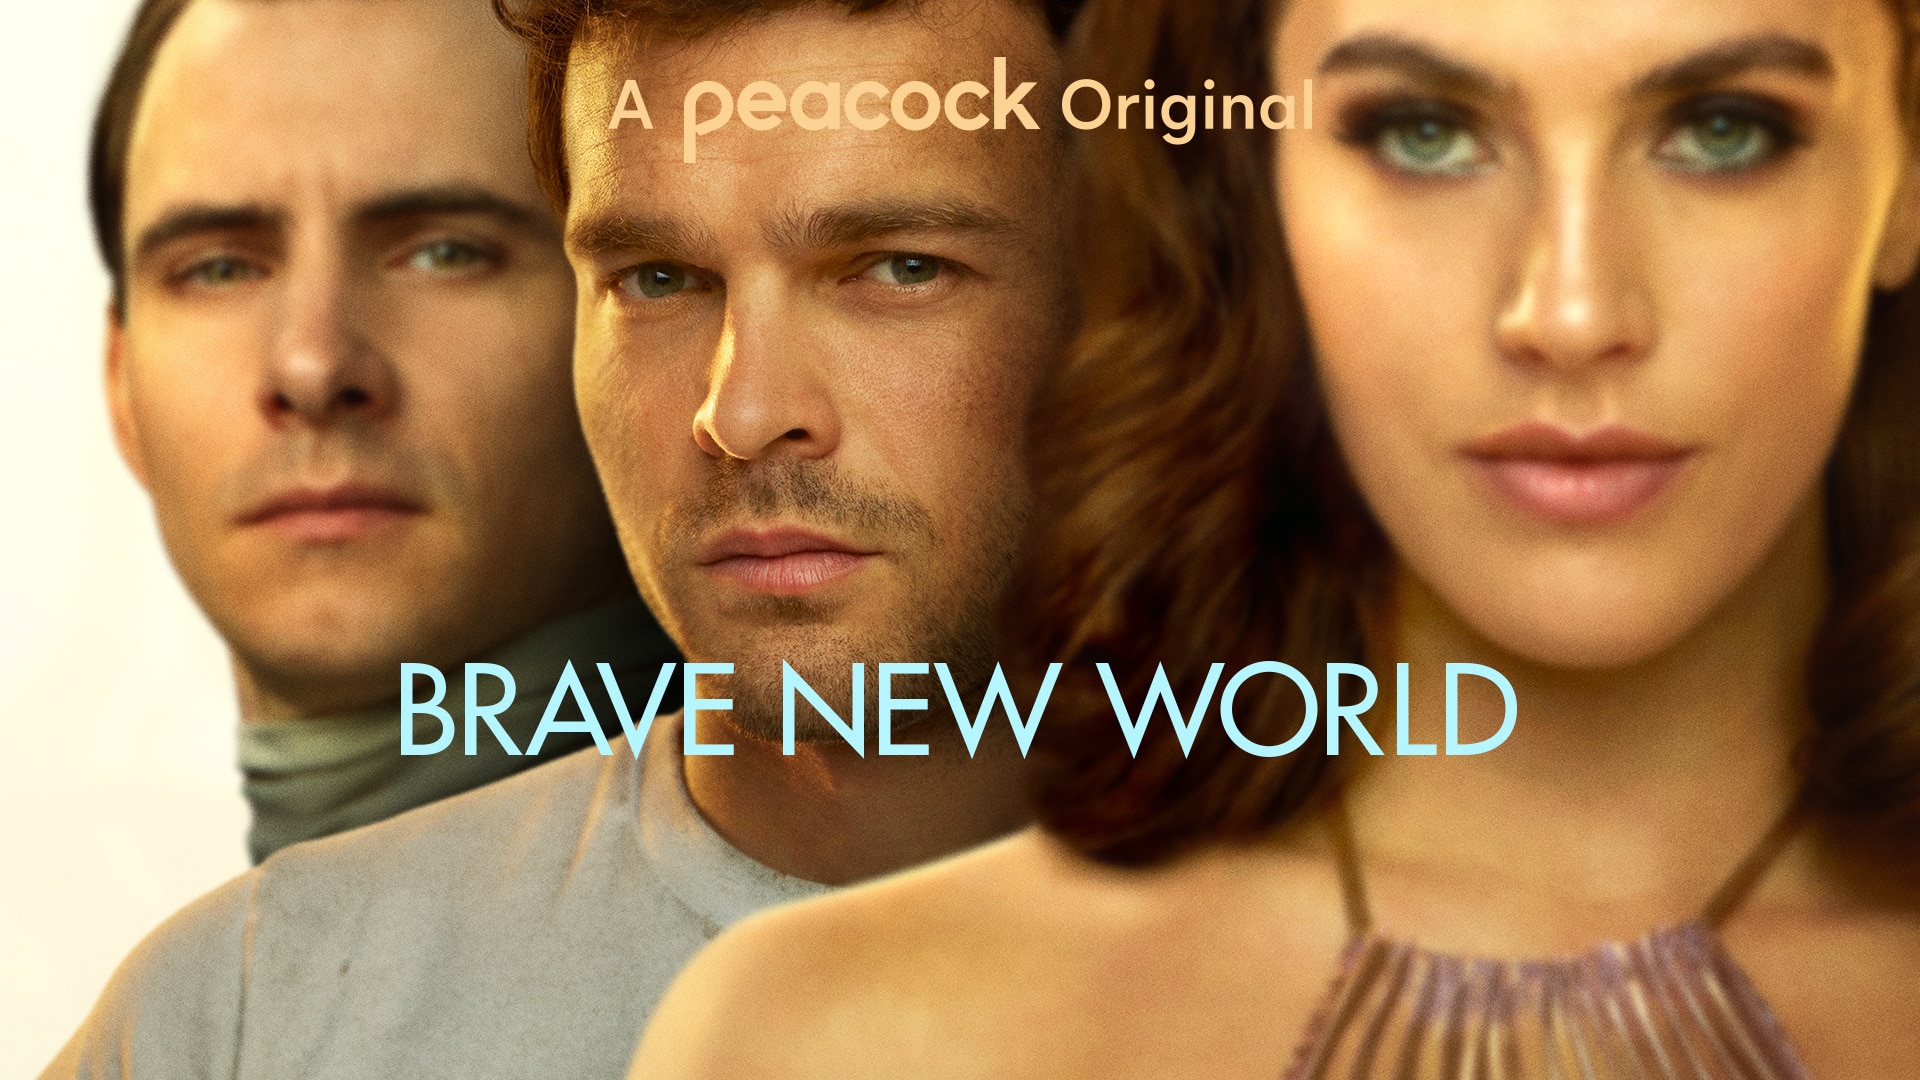 Watch Peacock Trailer Brave New World (Trailer)